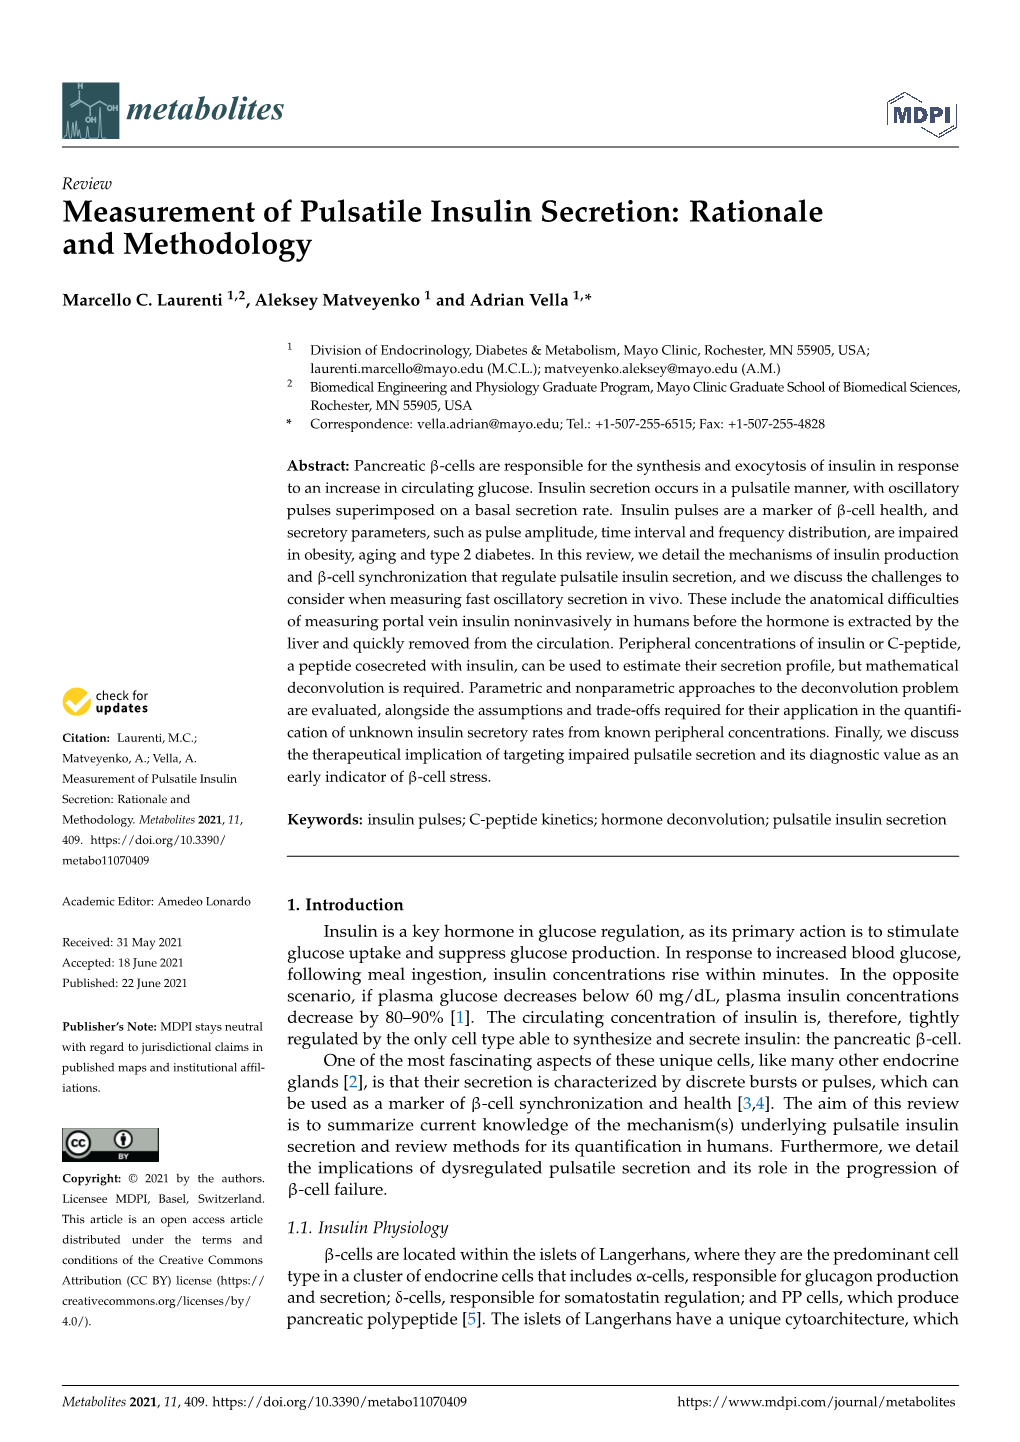 Measurement of Pulsatile Insulin Secretion: Rationale and Methodology